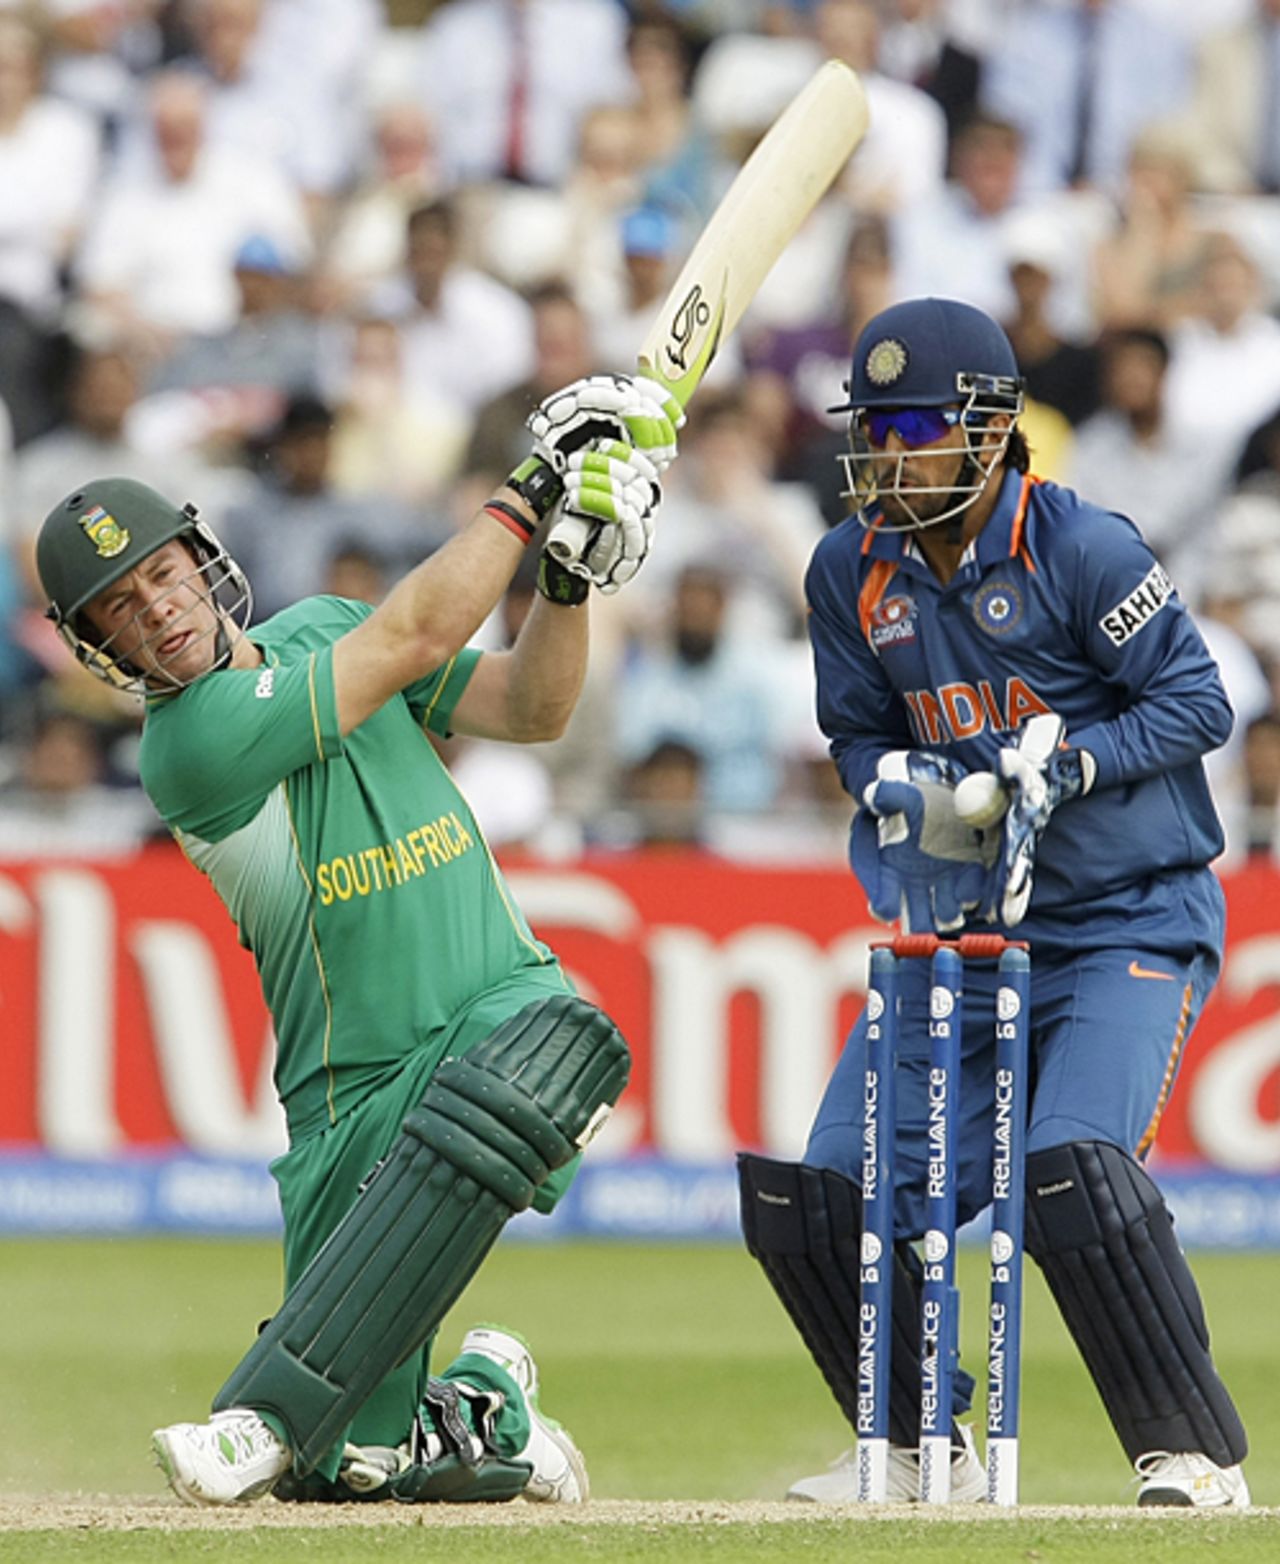 AB de Villiers eyes deep midwicket, India v South Africa, ICC World Twenty20 Super Eights, Trent Bridge, June 16, 2009 